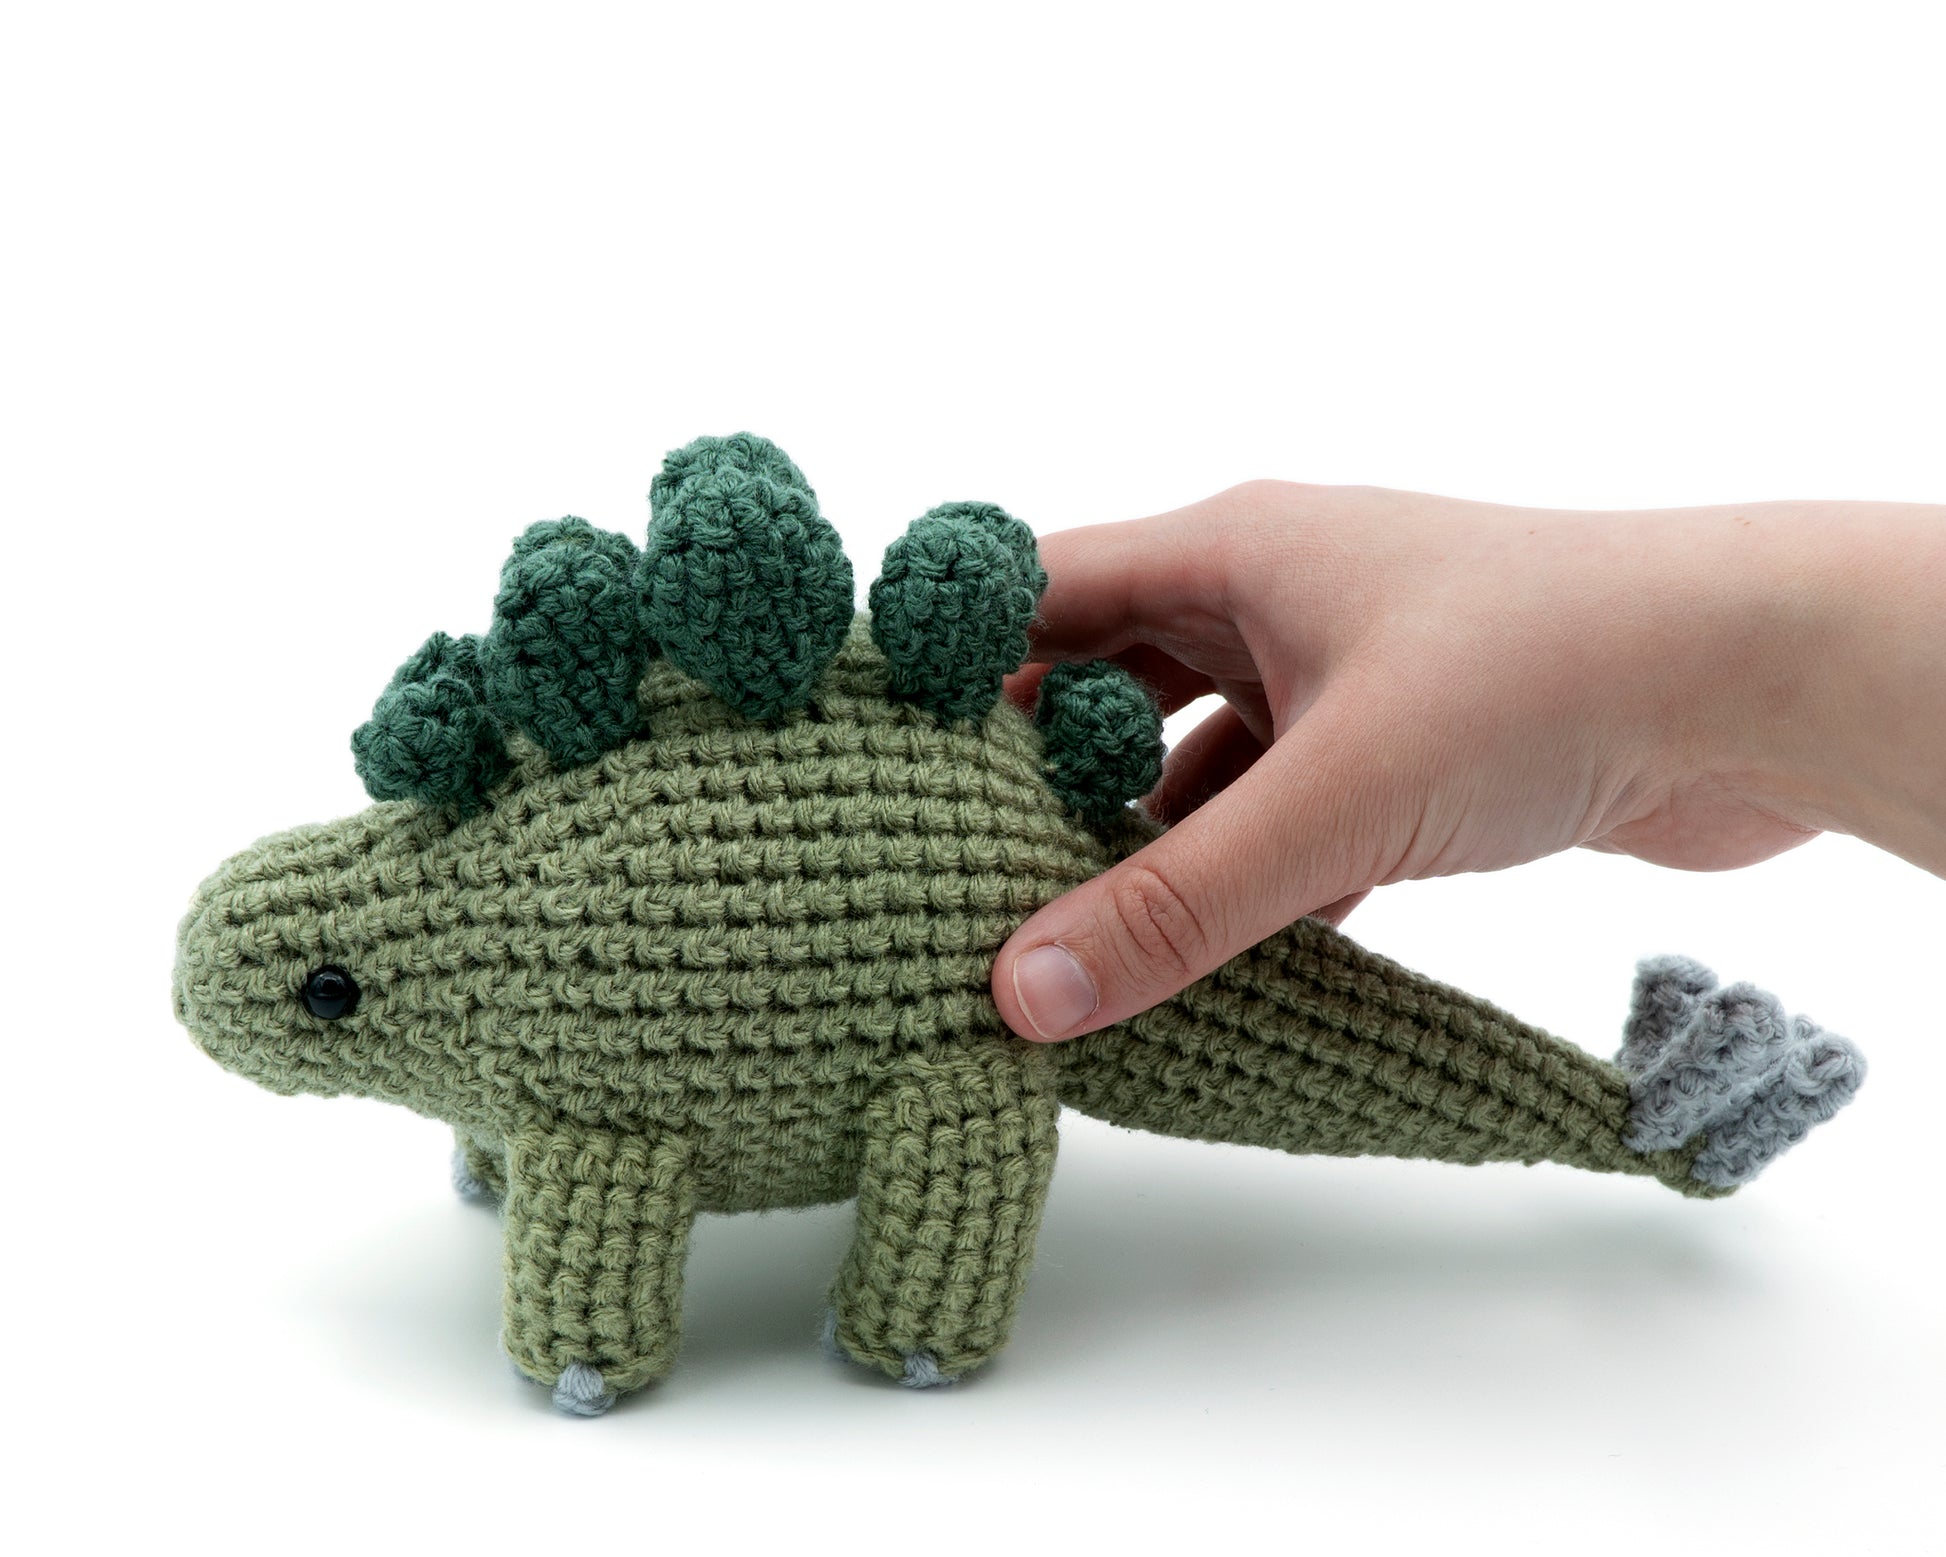 amigurumi crochet stegosaurus pattern in hand for size comparison